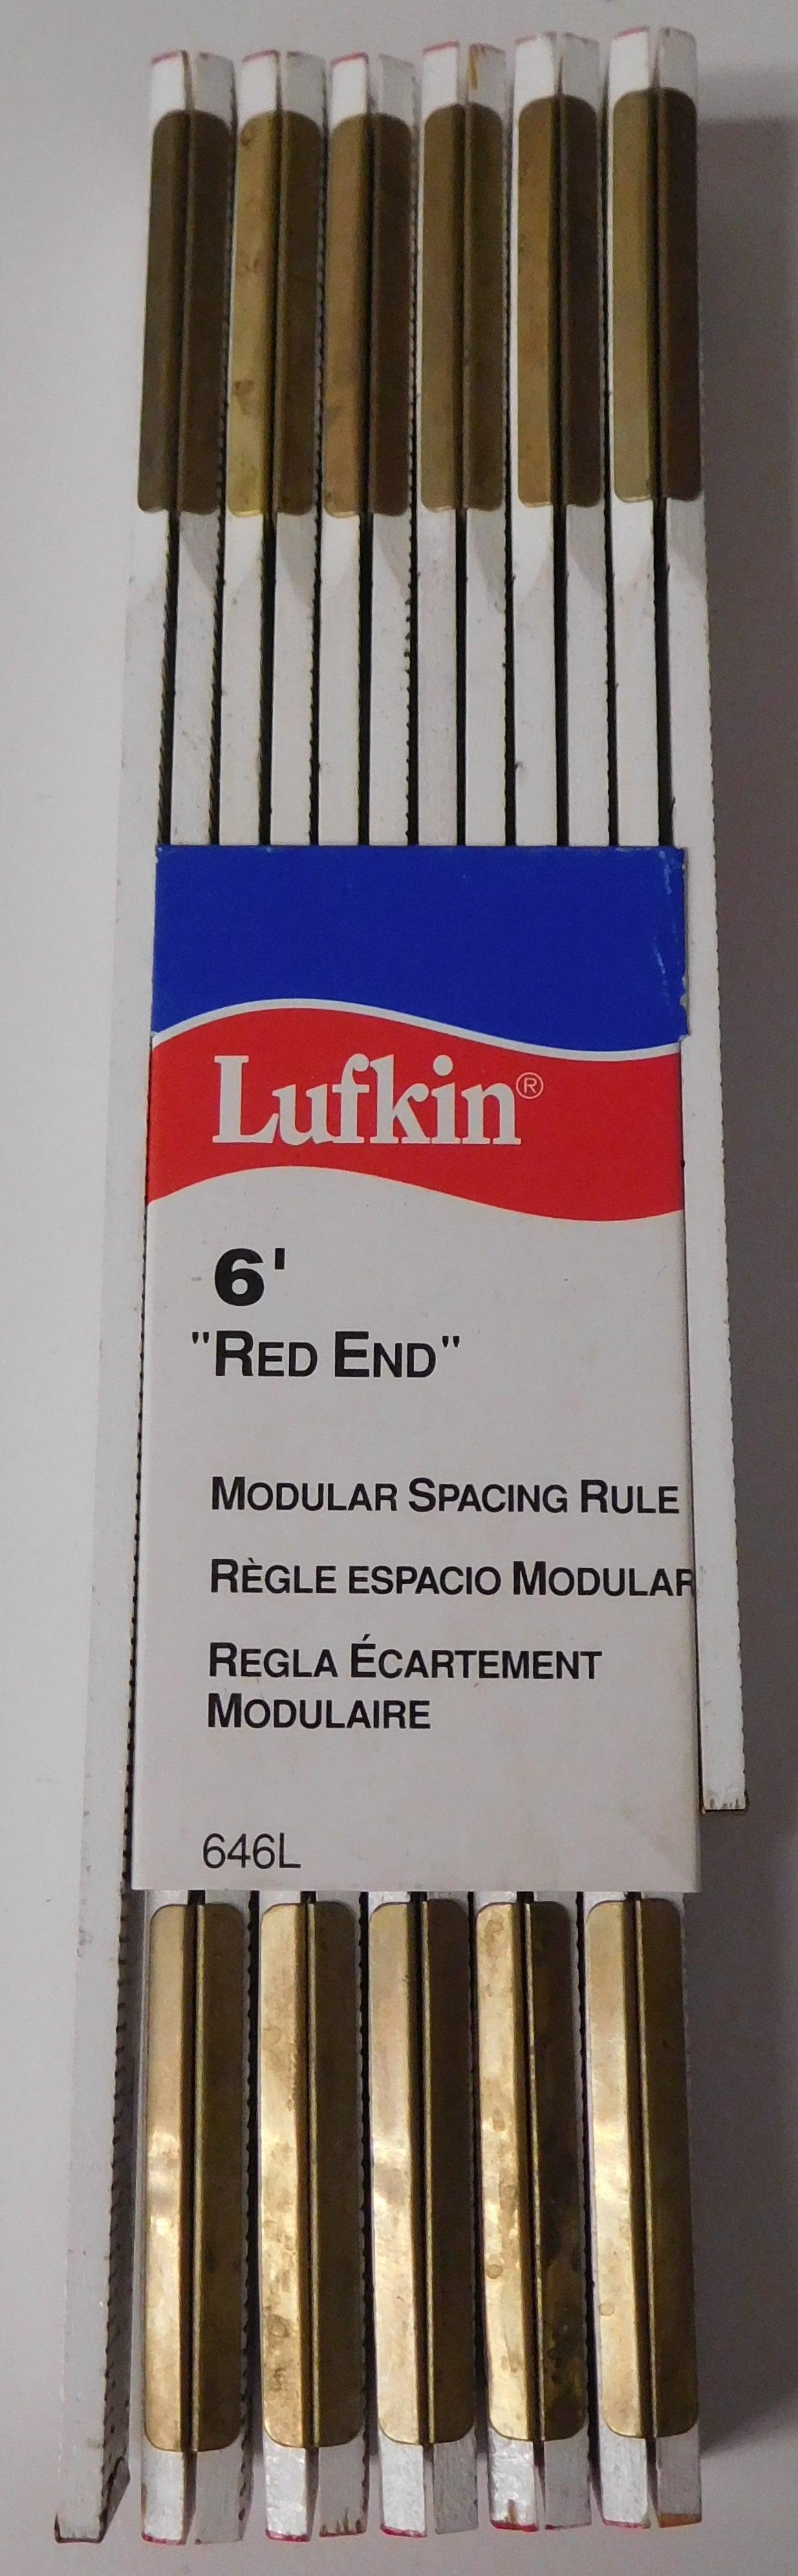 Lufkin 646L 6' Red End Modular Spacing Rule